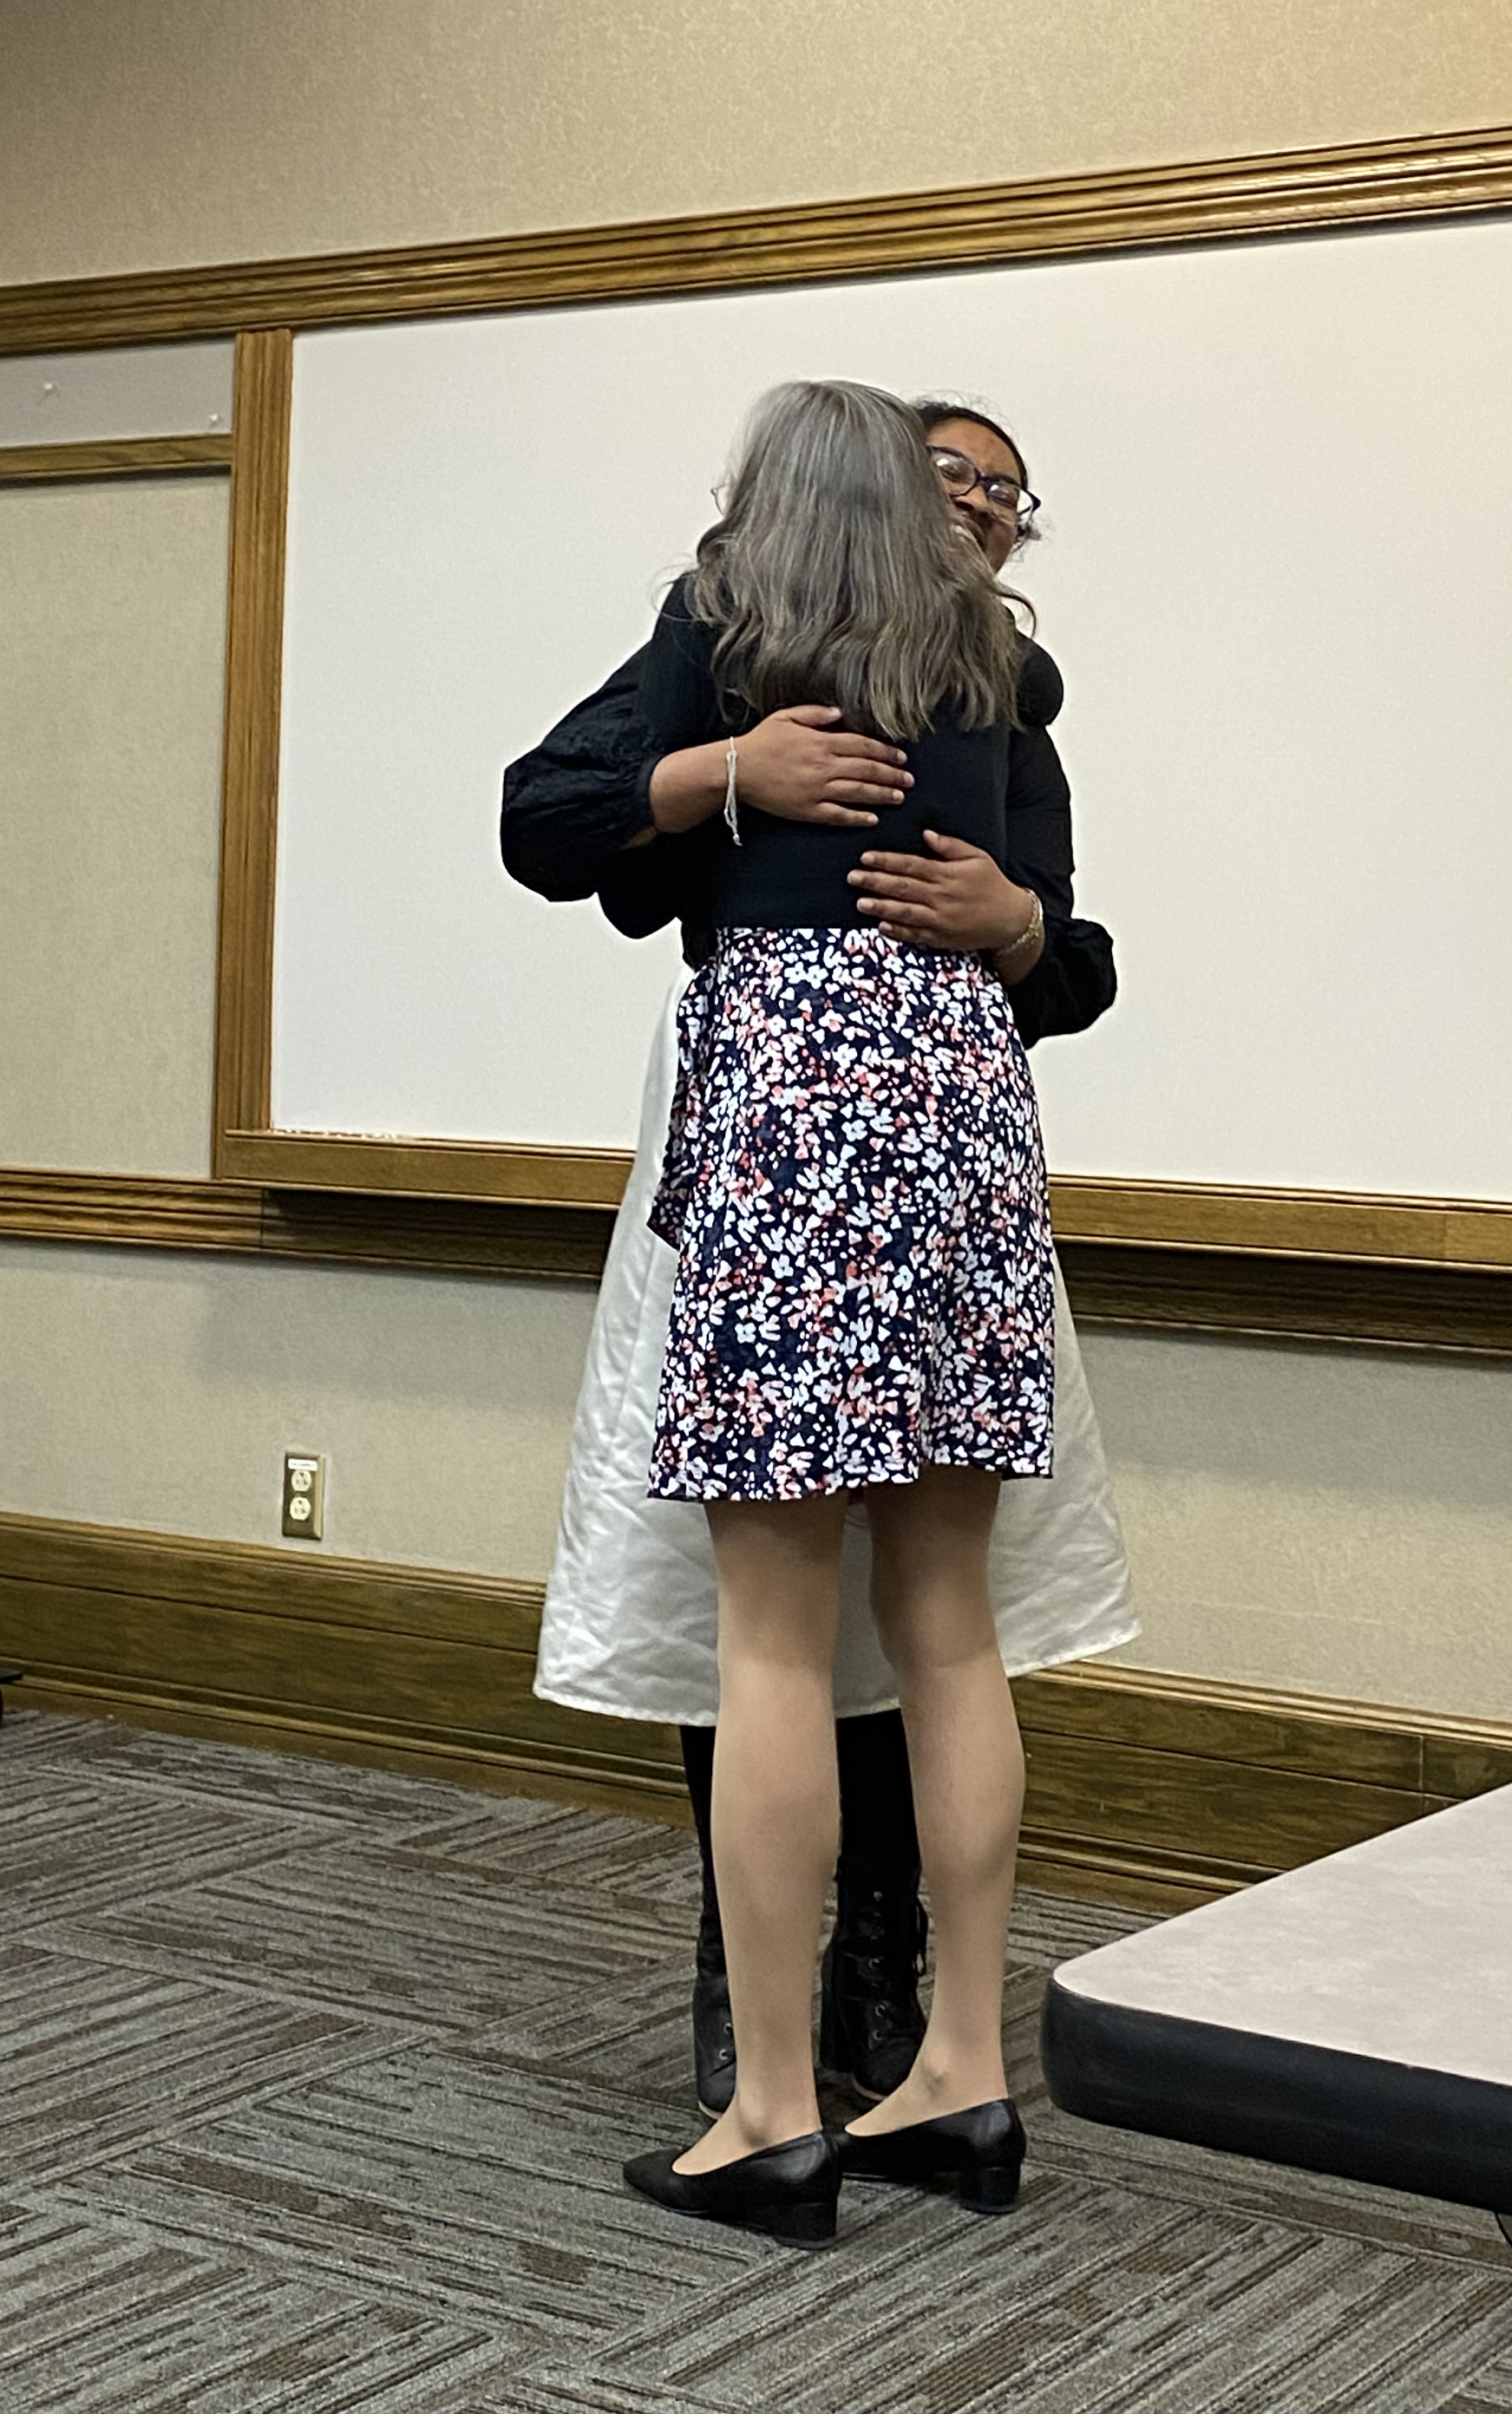 Professor and graduating senior hugging